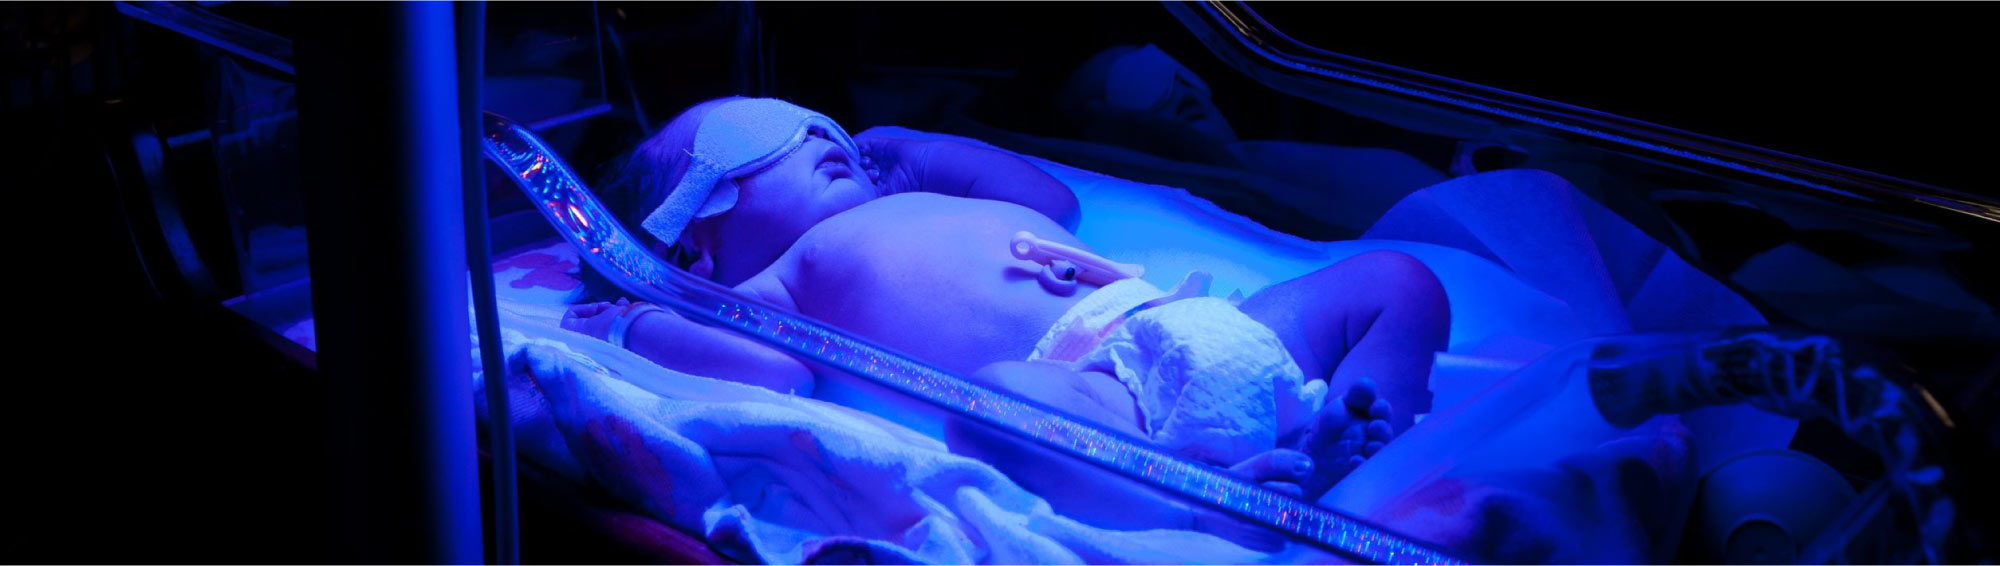 Lampa do fototerapii noworodka